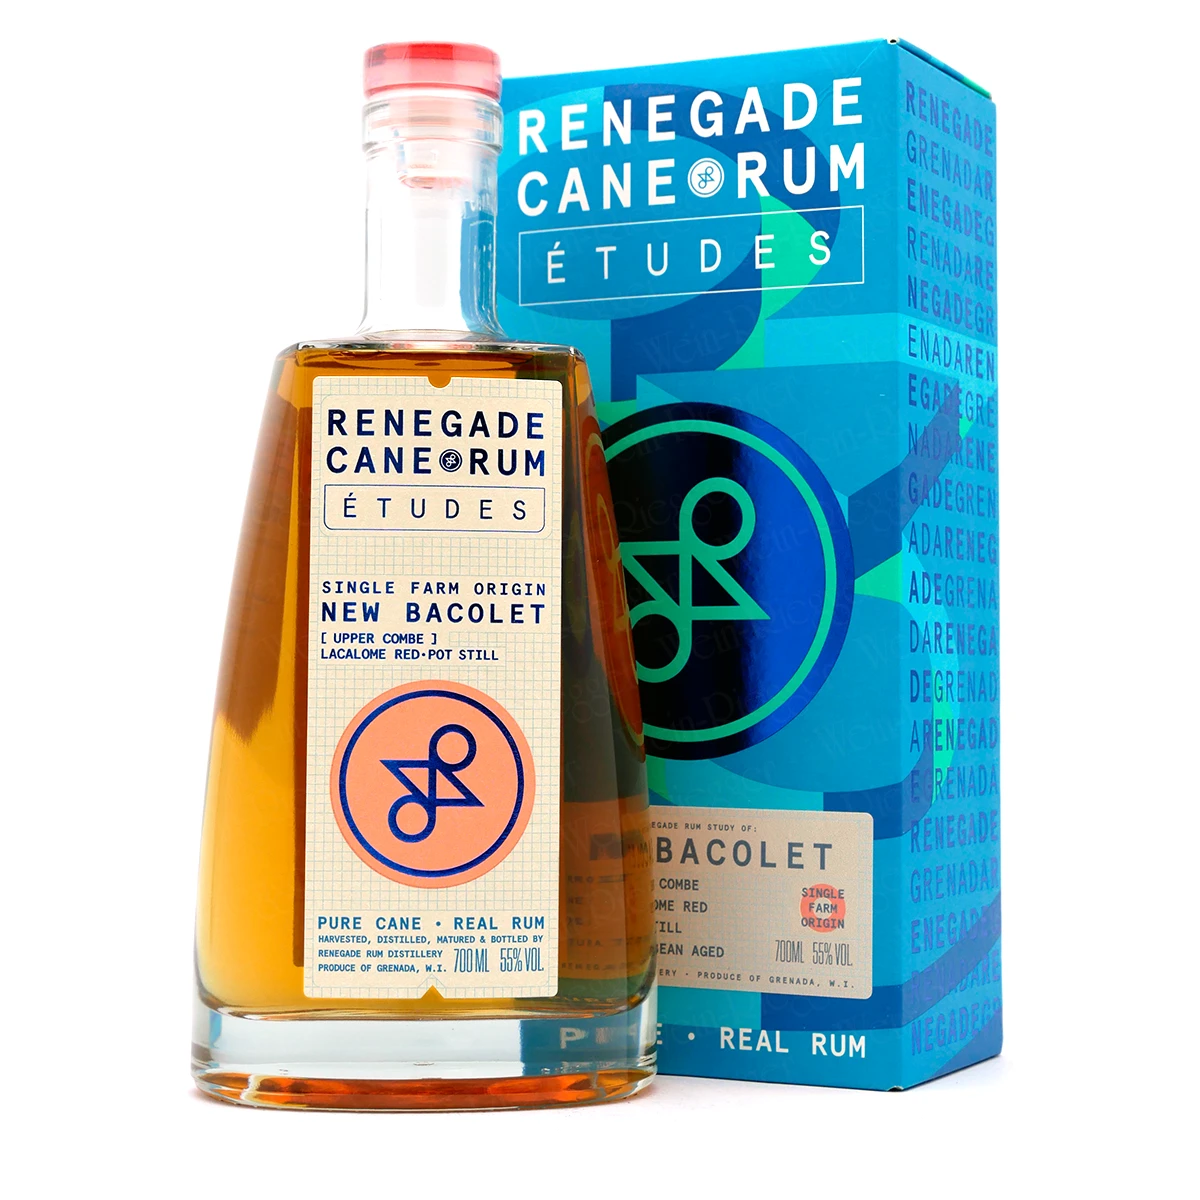 Renegade | ÉTUDES NEW BACOLET Pot Still Rum